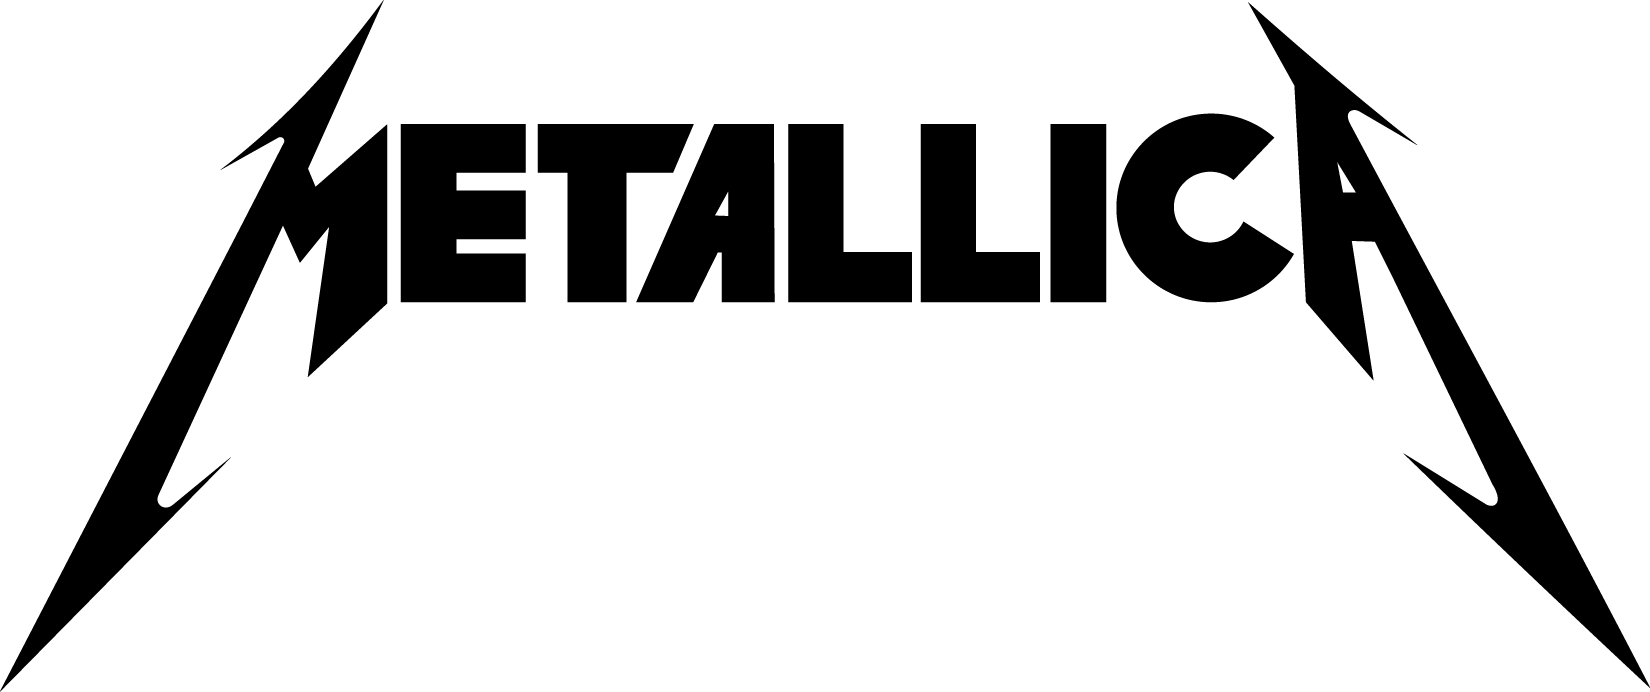 Metallica Logo png